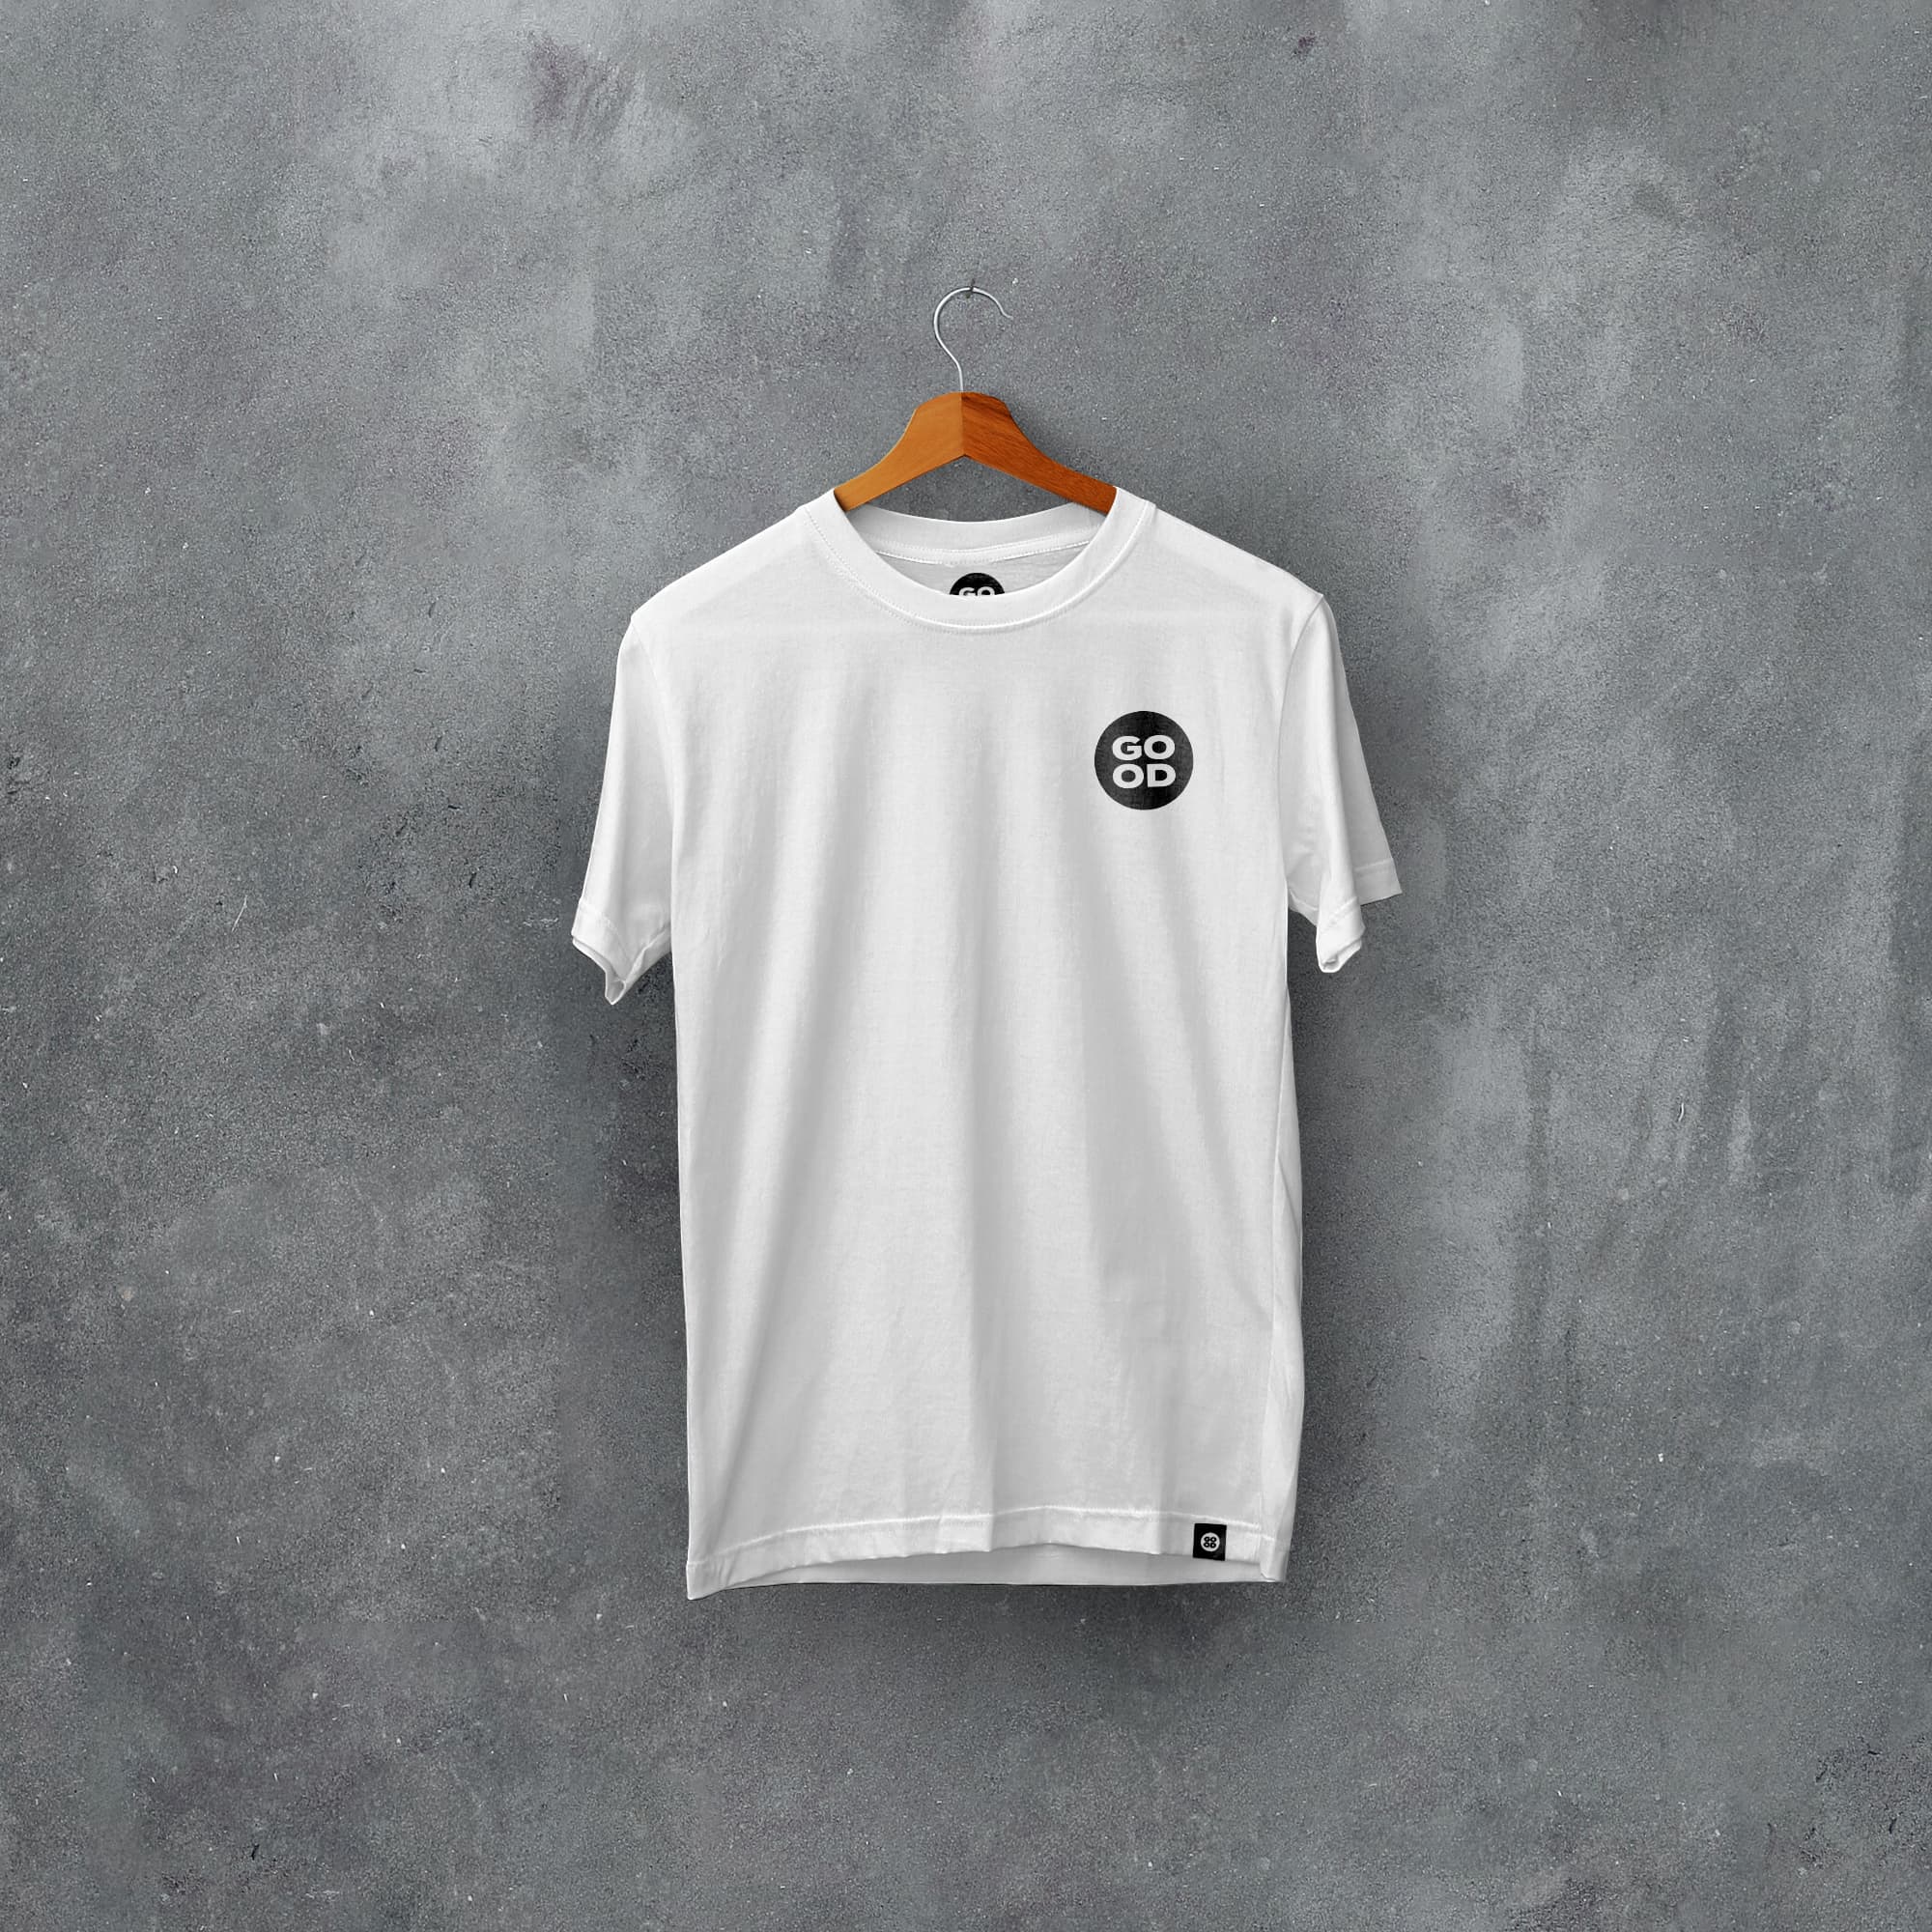 Liverpool Classic Kits Football T-Shirt